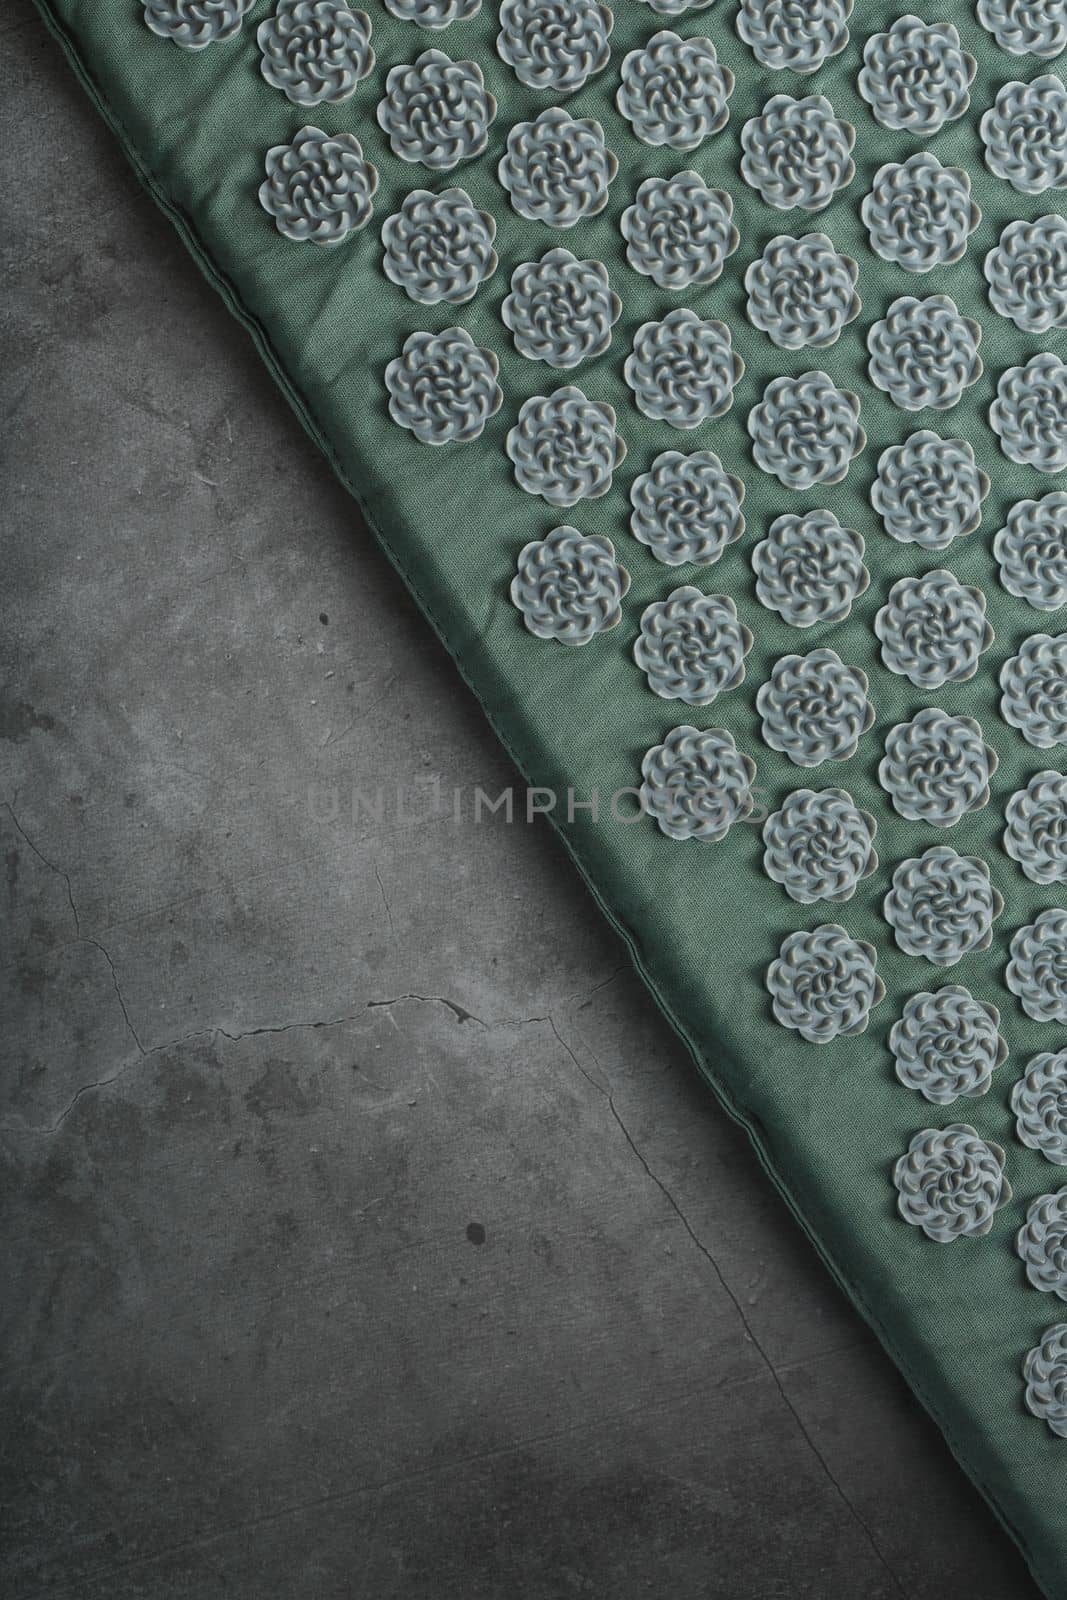 Massage mat with prickly spikes Kuznetsov applicator by AlexGrec